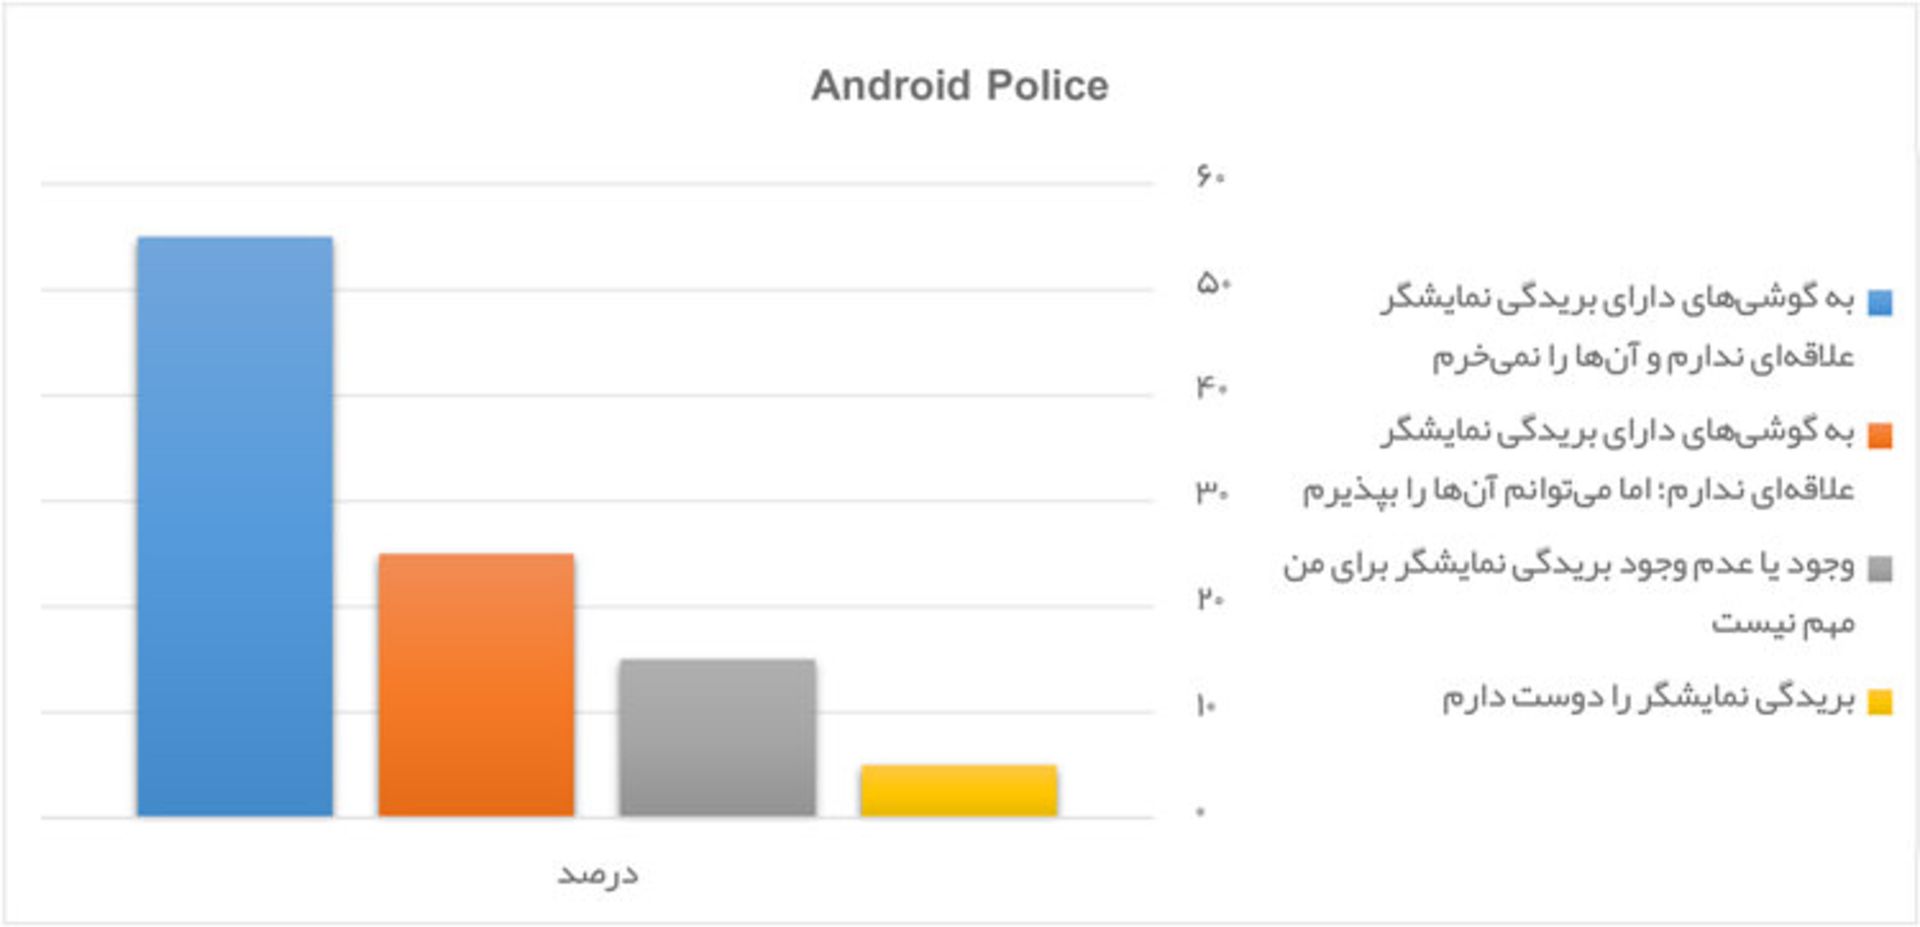 نظرسنجی ناچ اندروید پلیس / Android Police Notch Poll